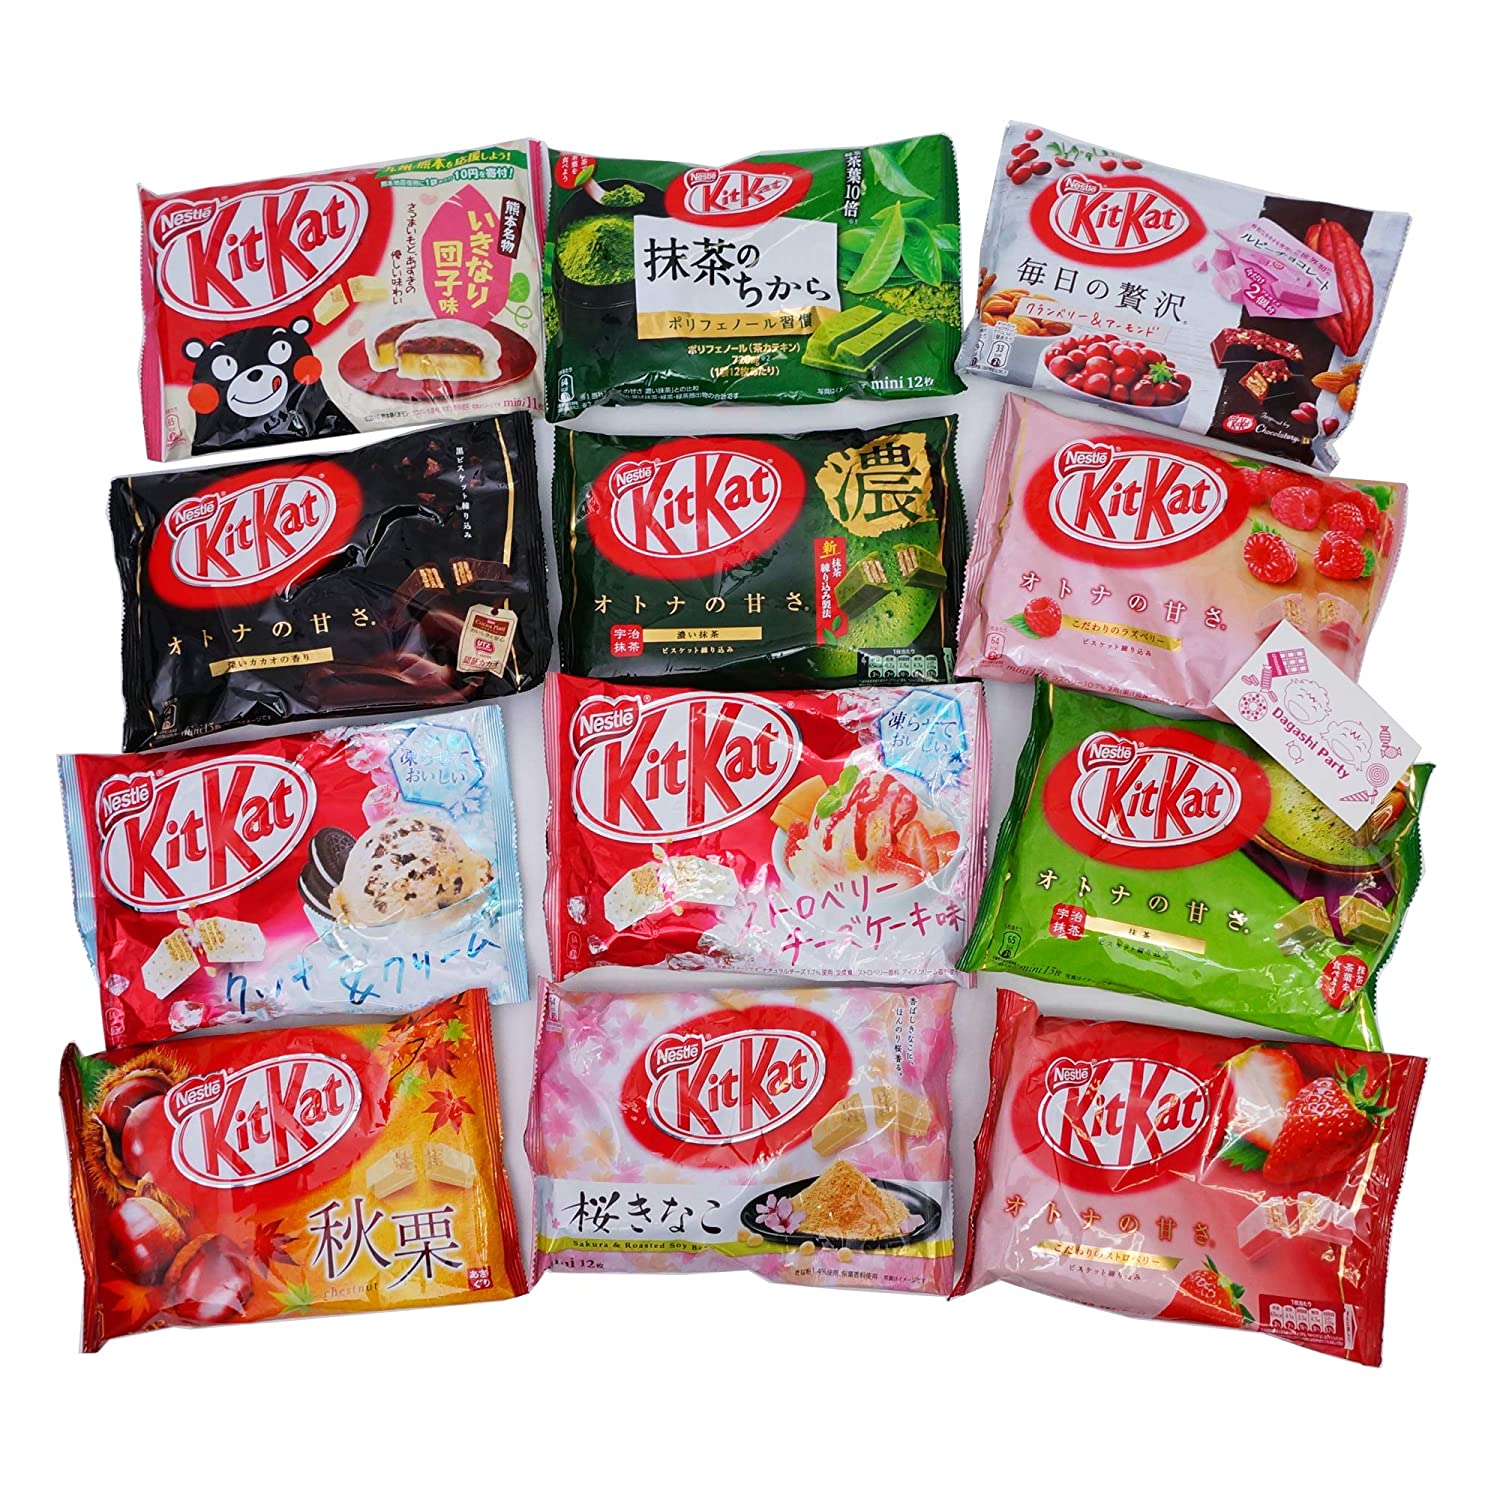 Nestle Japan Kit Kat candy bars Comparison 8 Bags Random Set Variety Assortment 8 Bags Japanese chocolate